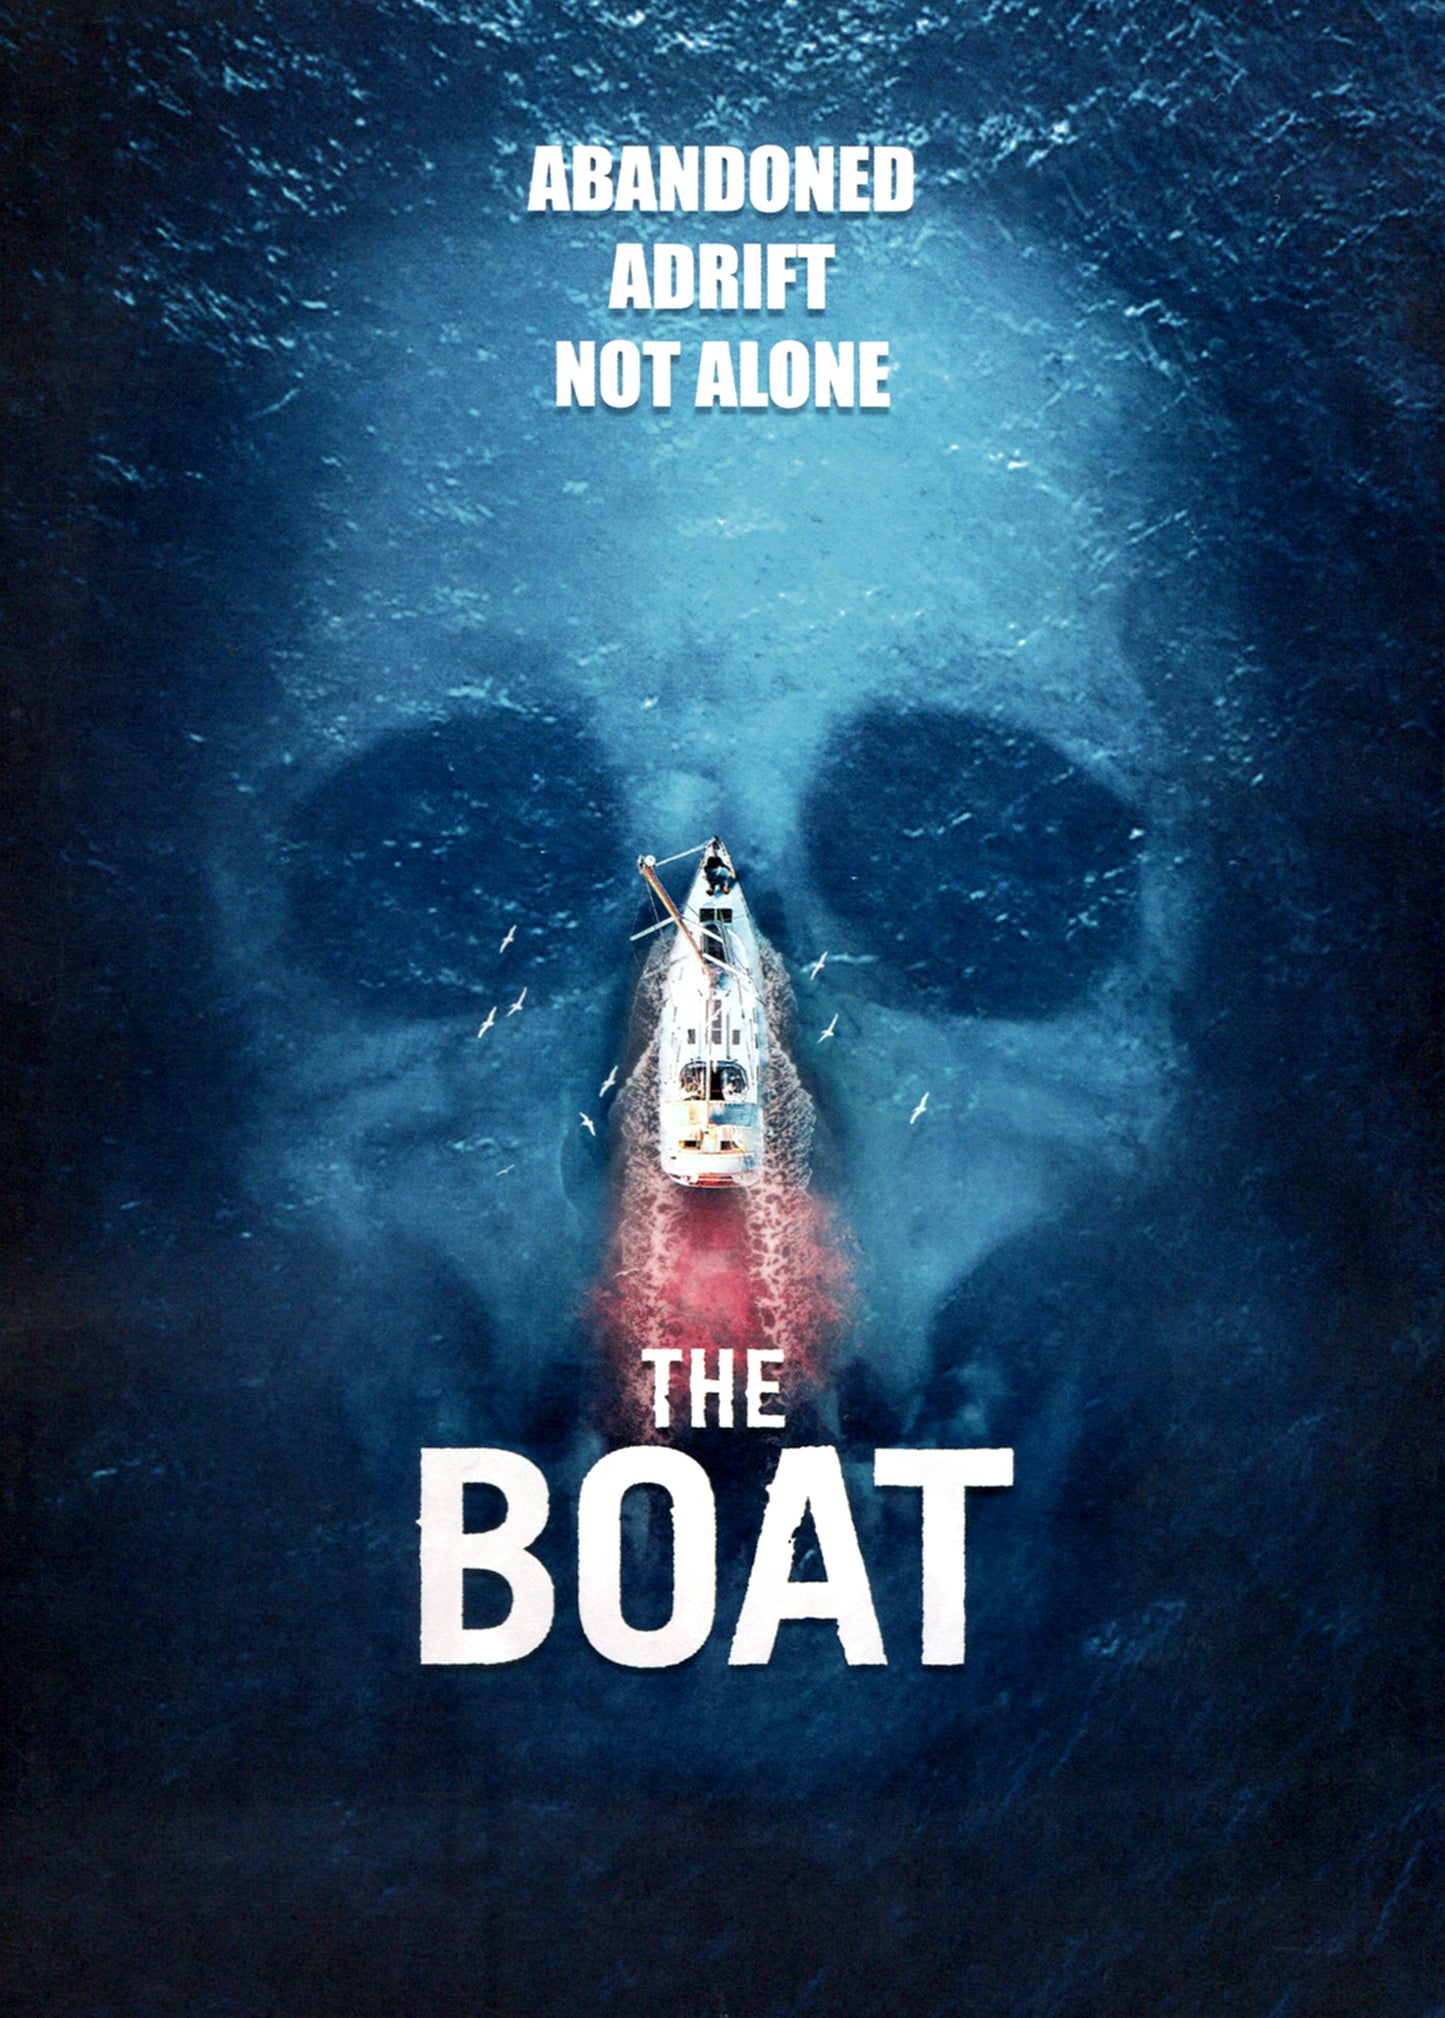 Boat cover art